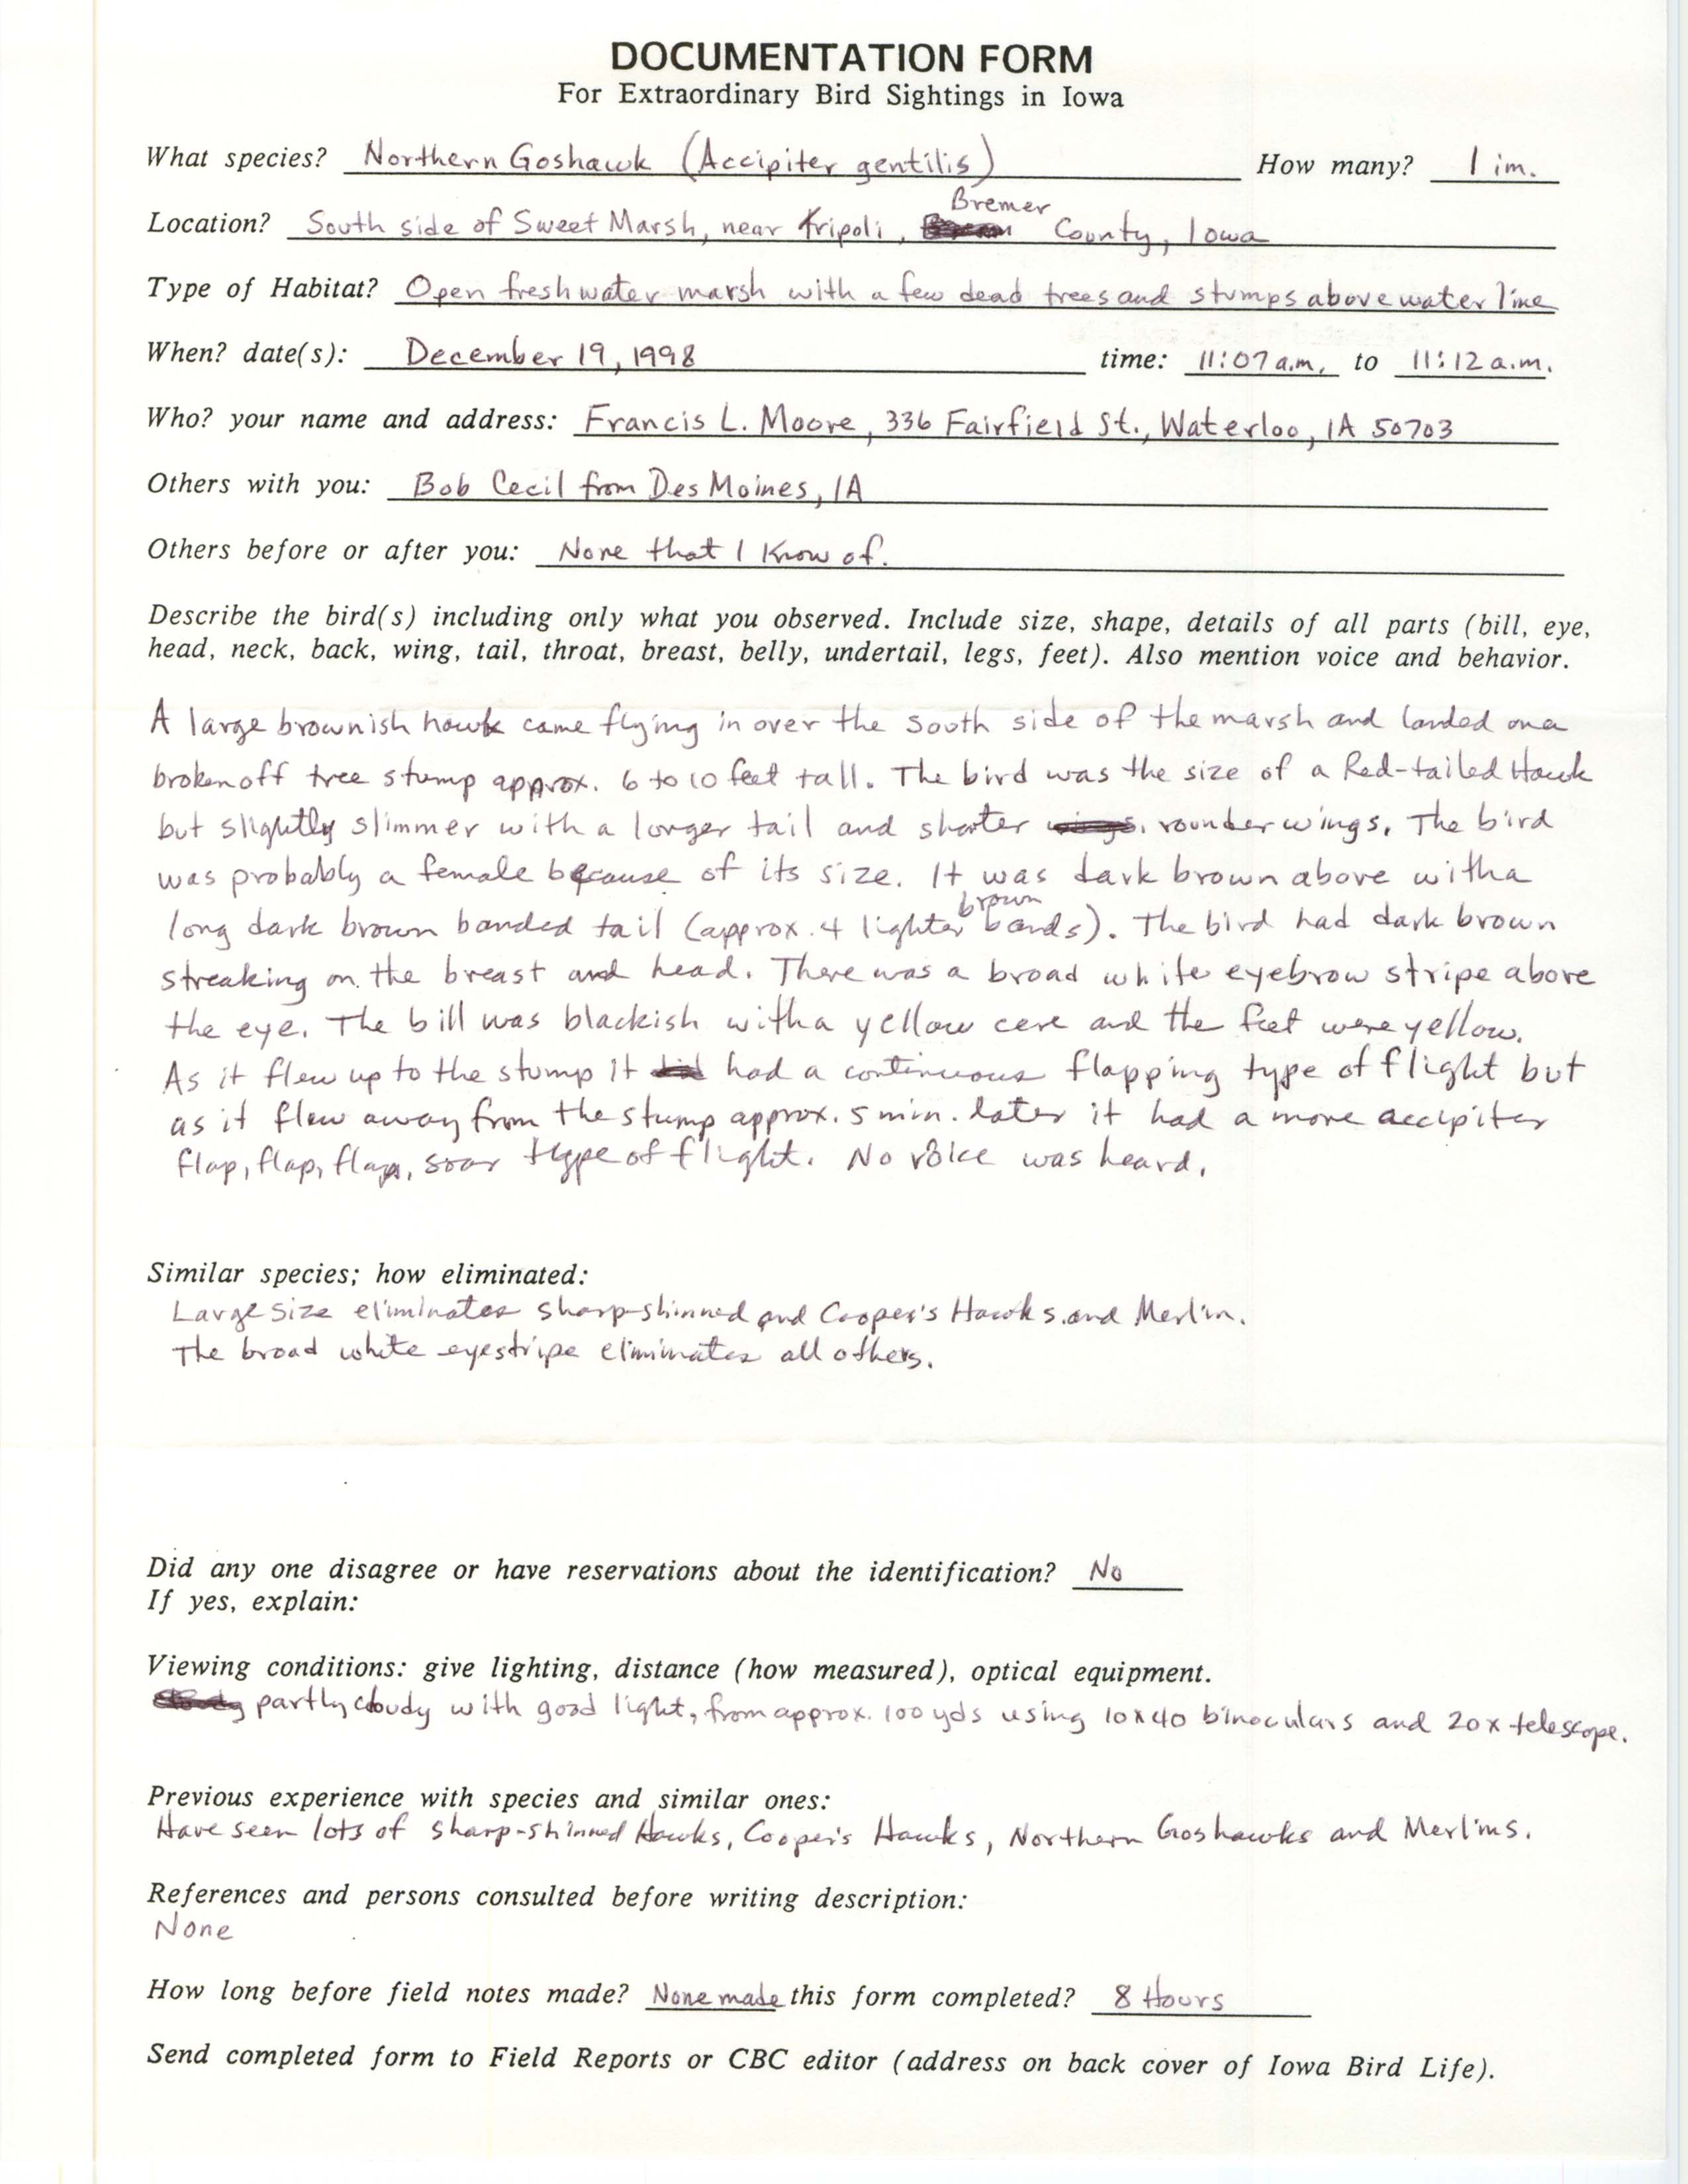 Rare bird documentation form for Northern Goshawk at Sweet Marsh, 1998